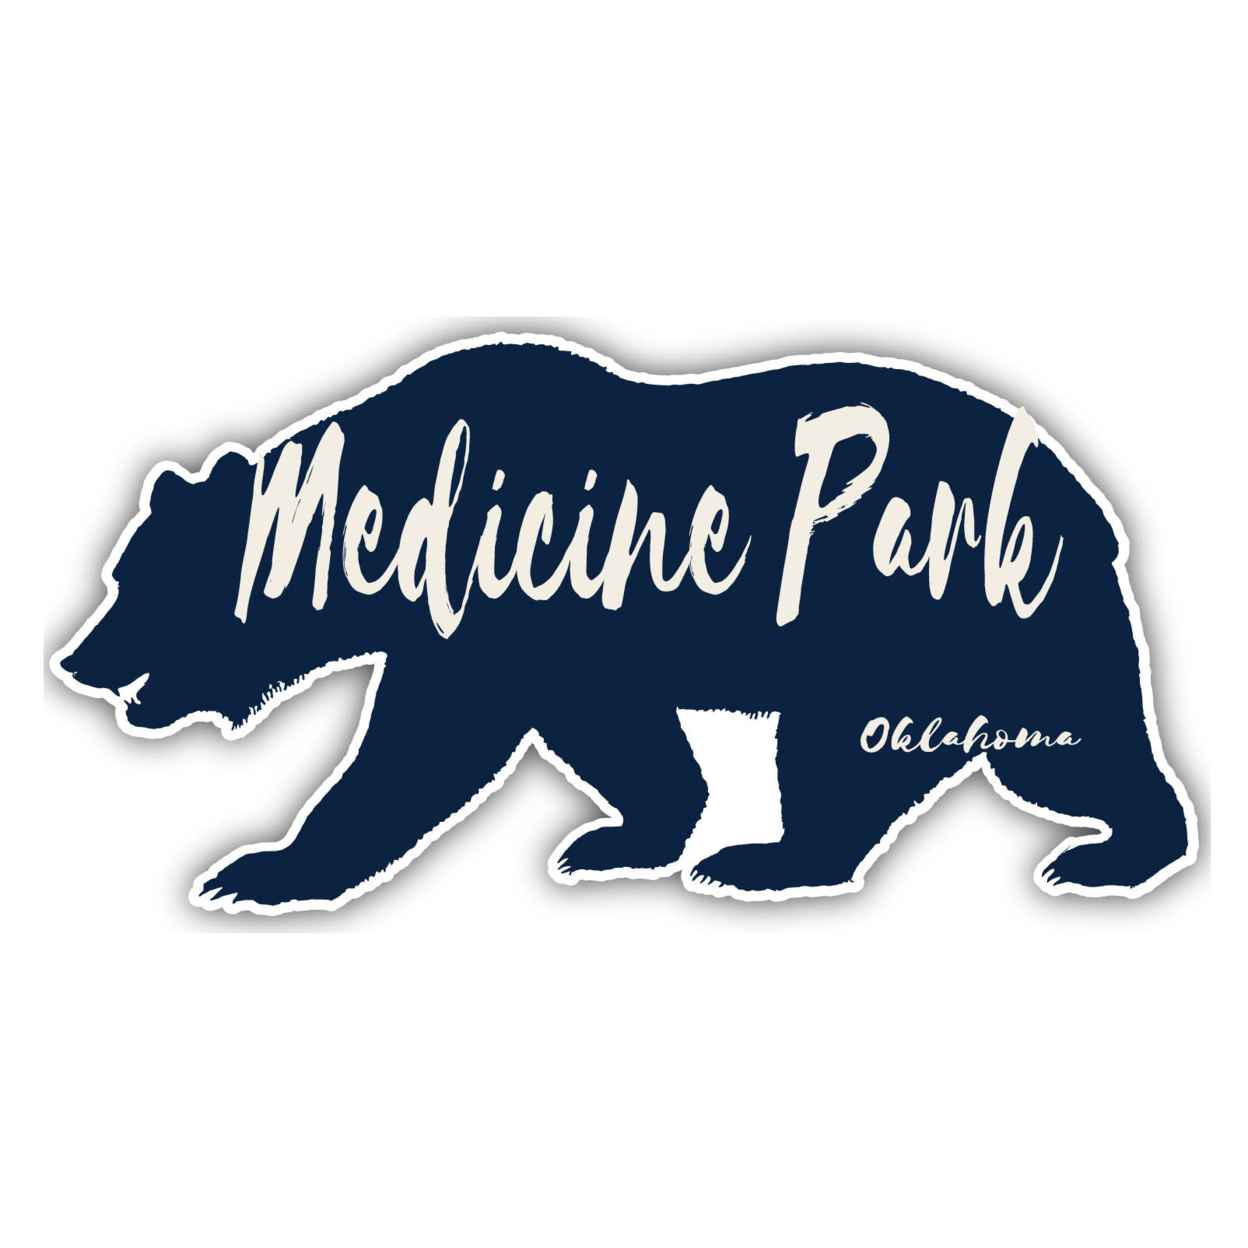 Medicine Park Oklahoma Souvenir Decorative Stickers (Choose Theme And Size) - 4-Inch, Adventures Awaits